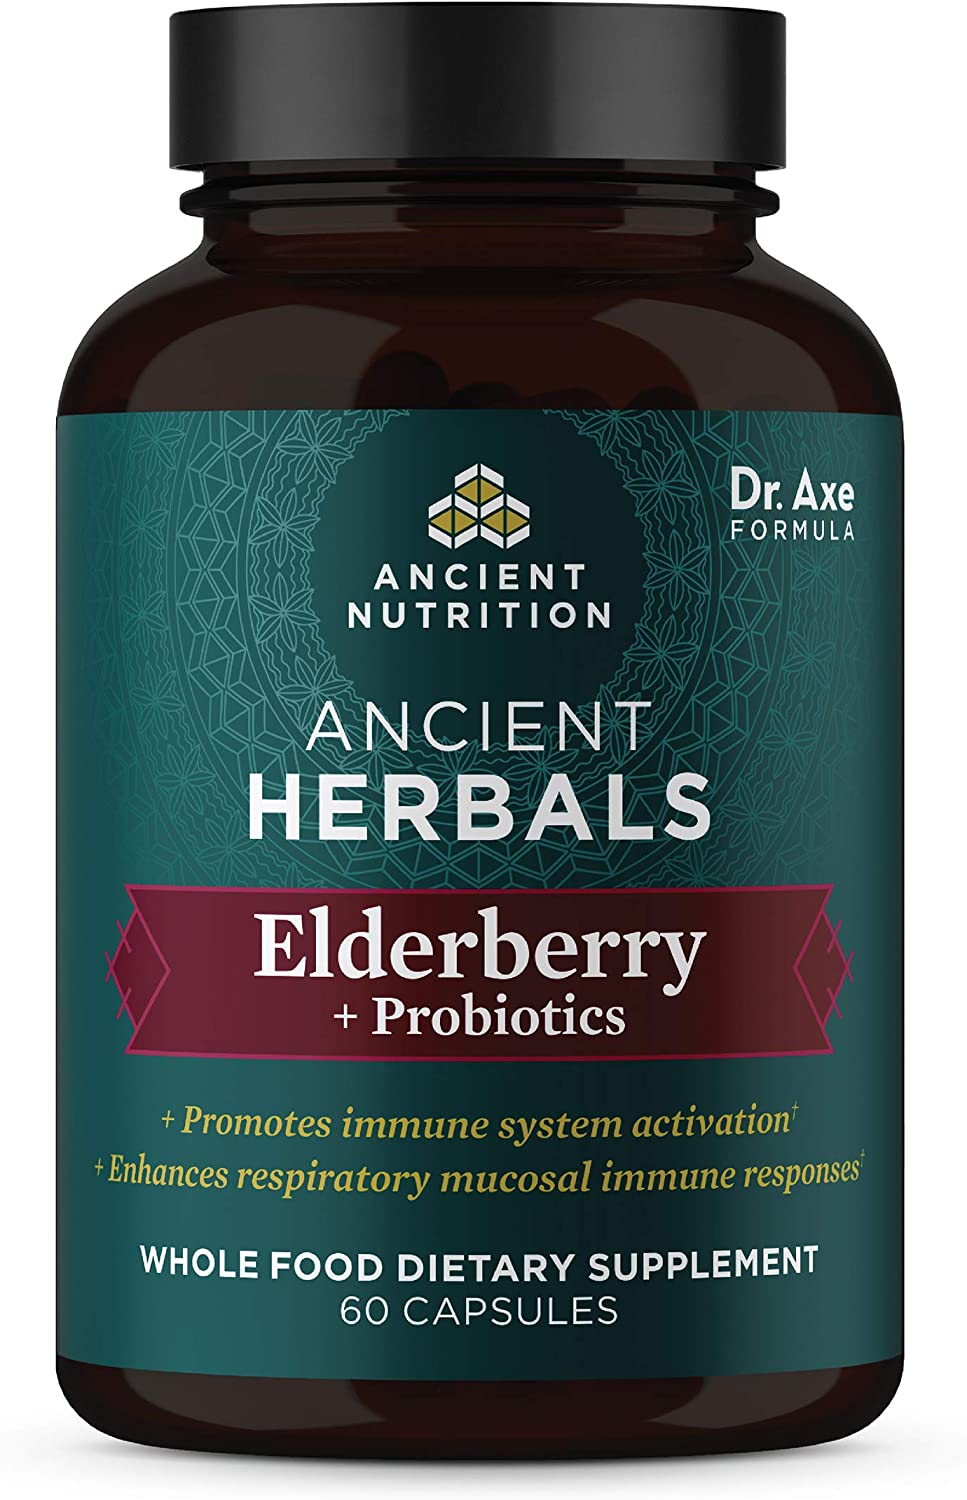 Ancient Nutrition Ancient Herbals Black Elderberry Capsules - 60 Tablet